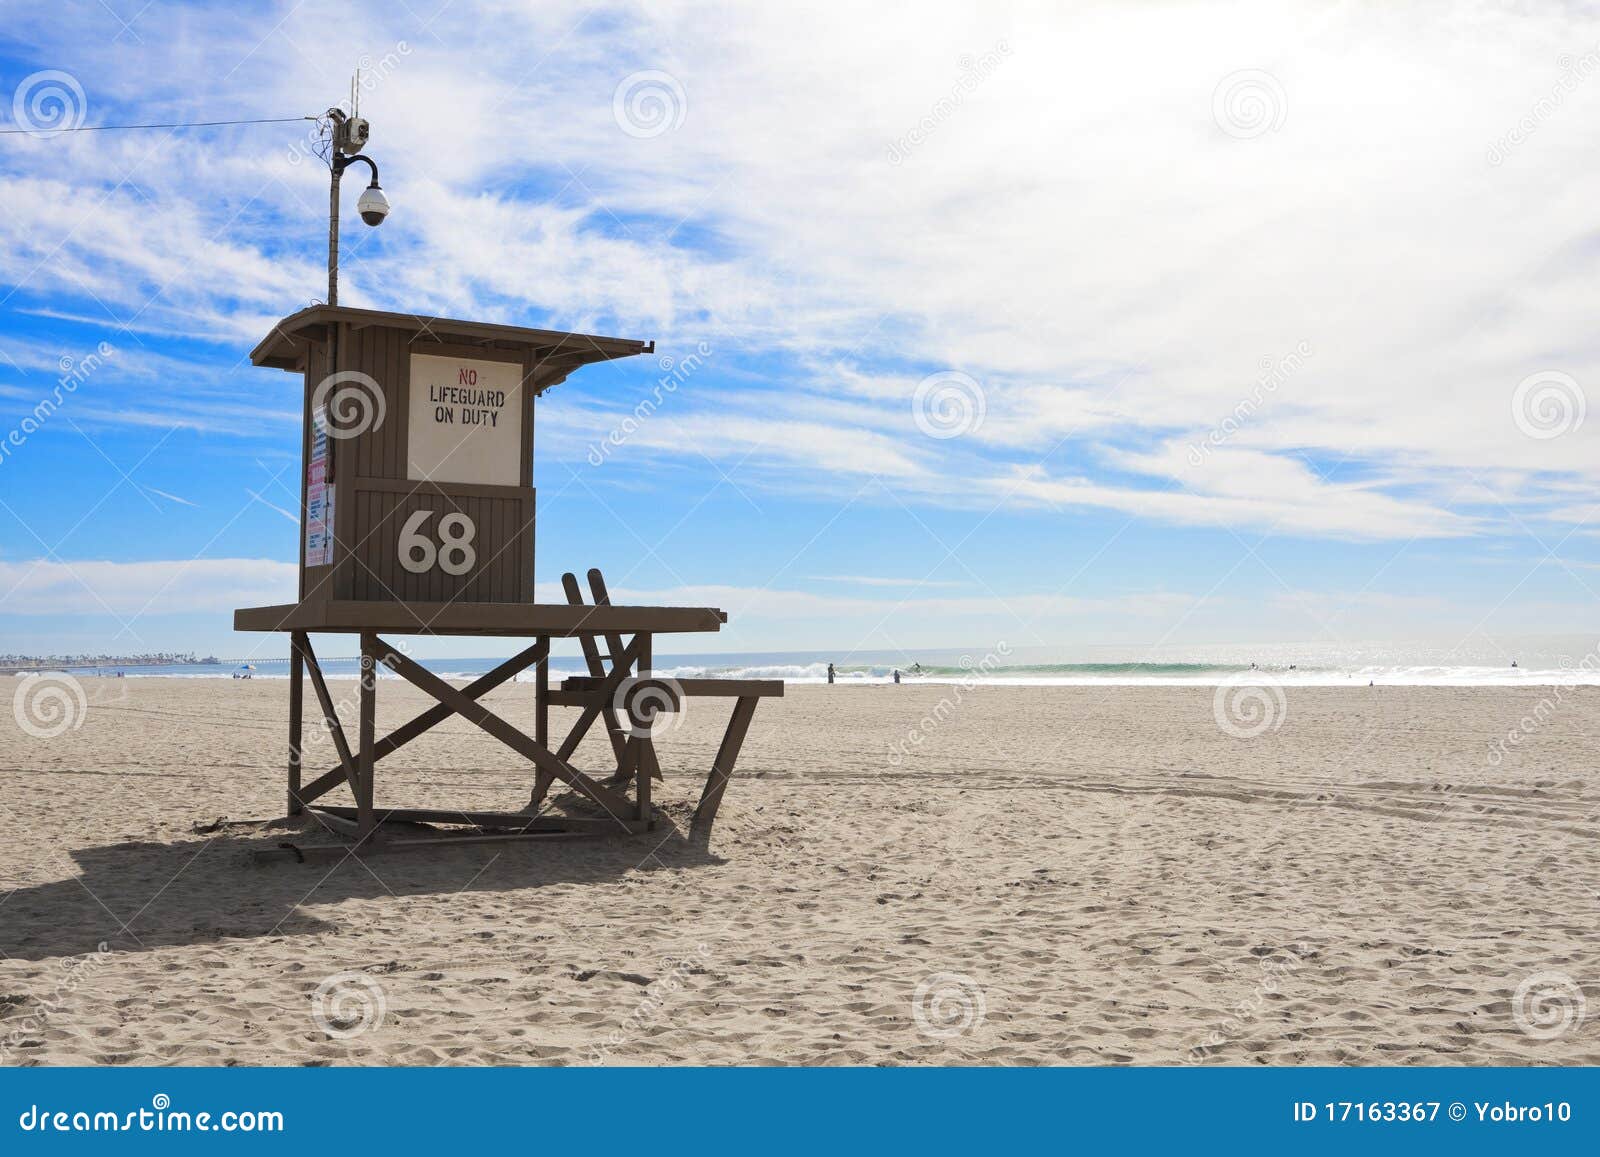 lifeguard tower at newport beach, california